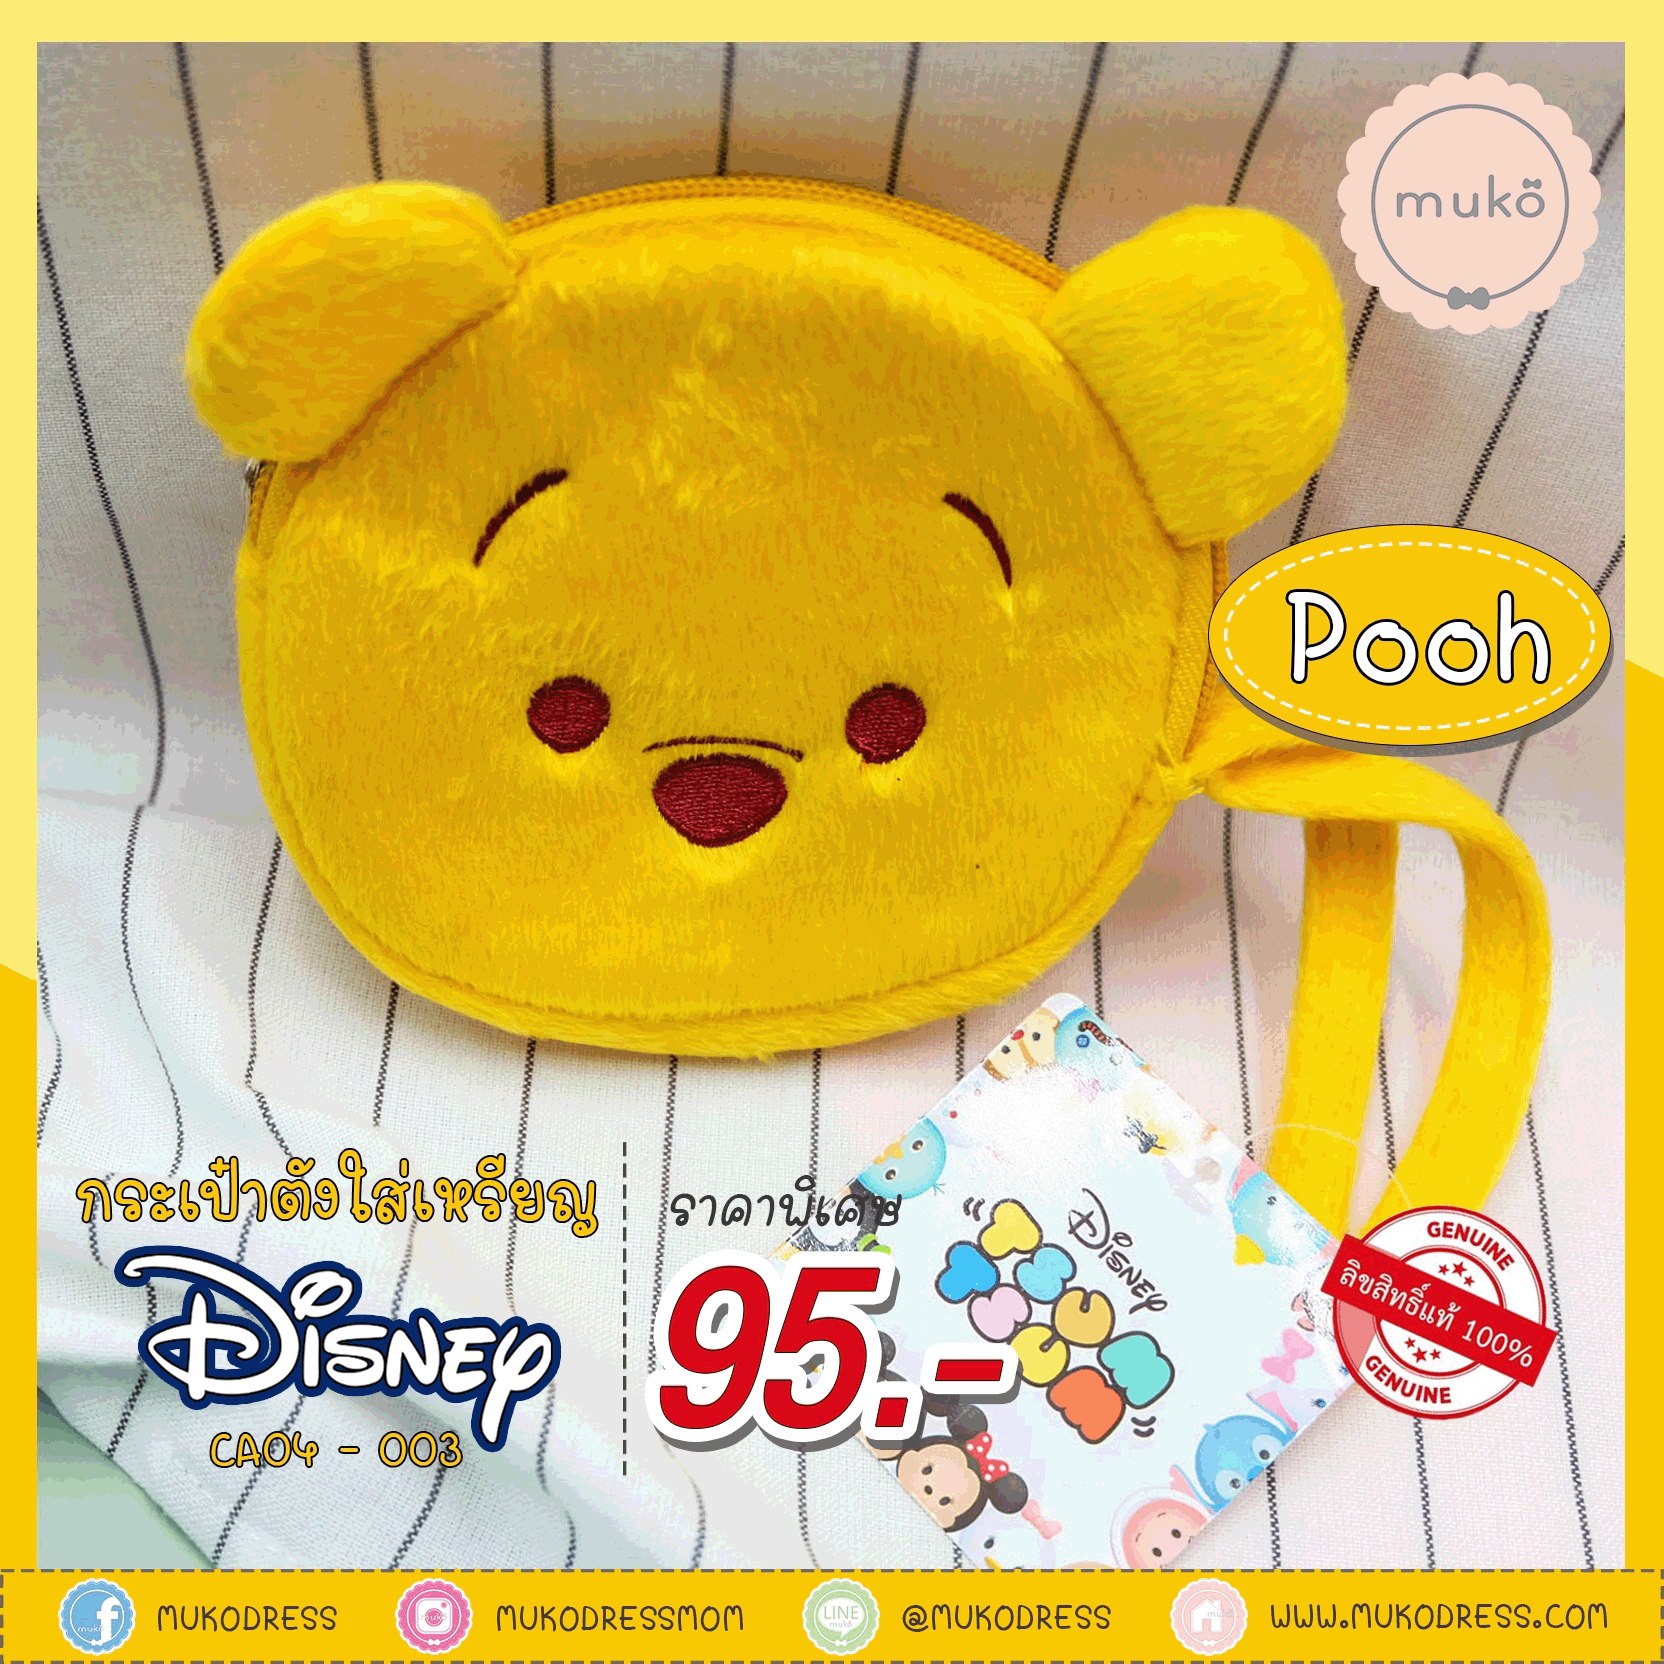 Disney Tsum Tsum กระเป๋าตังใส่เหรีญไซส์มินิสุดคิ้วส์ ลิขสิทธิ์แท้ CA04-003 Pooh (หมีพูห์)